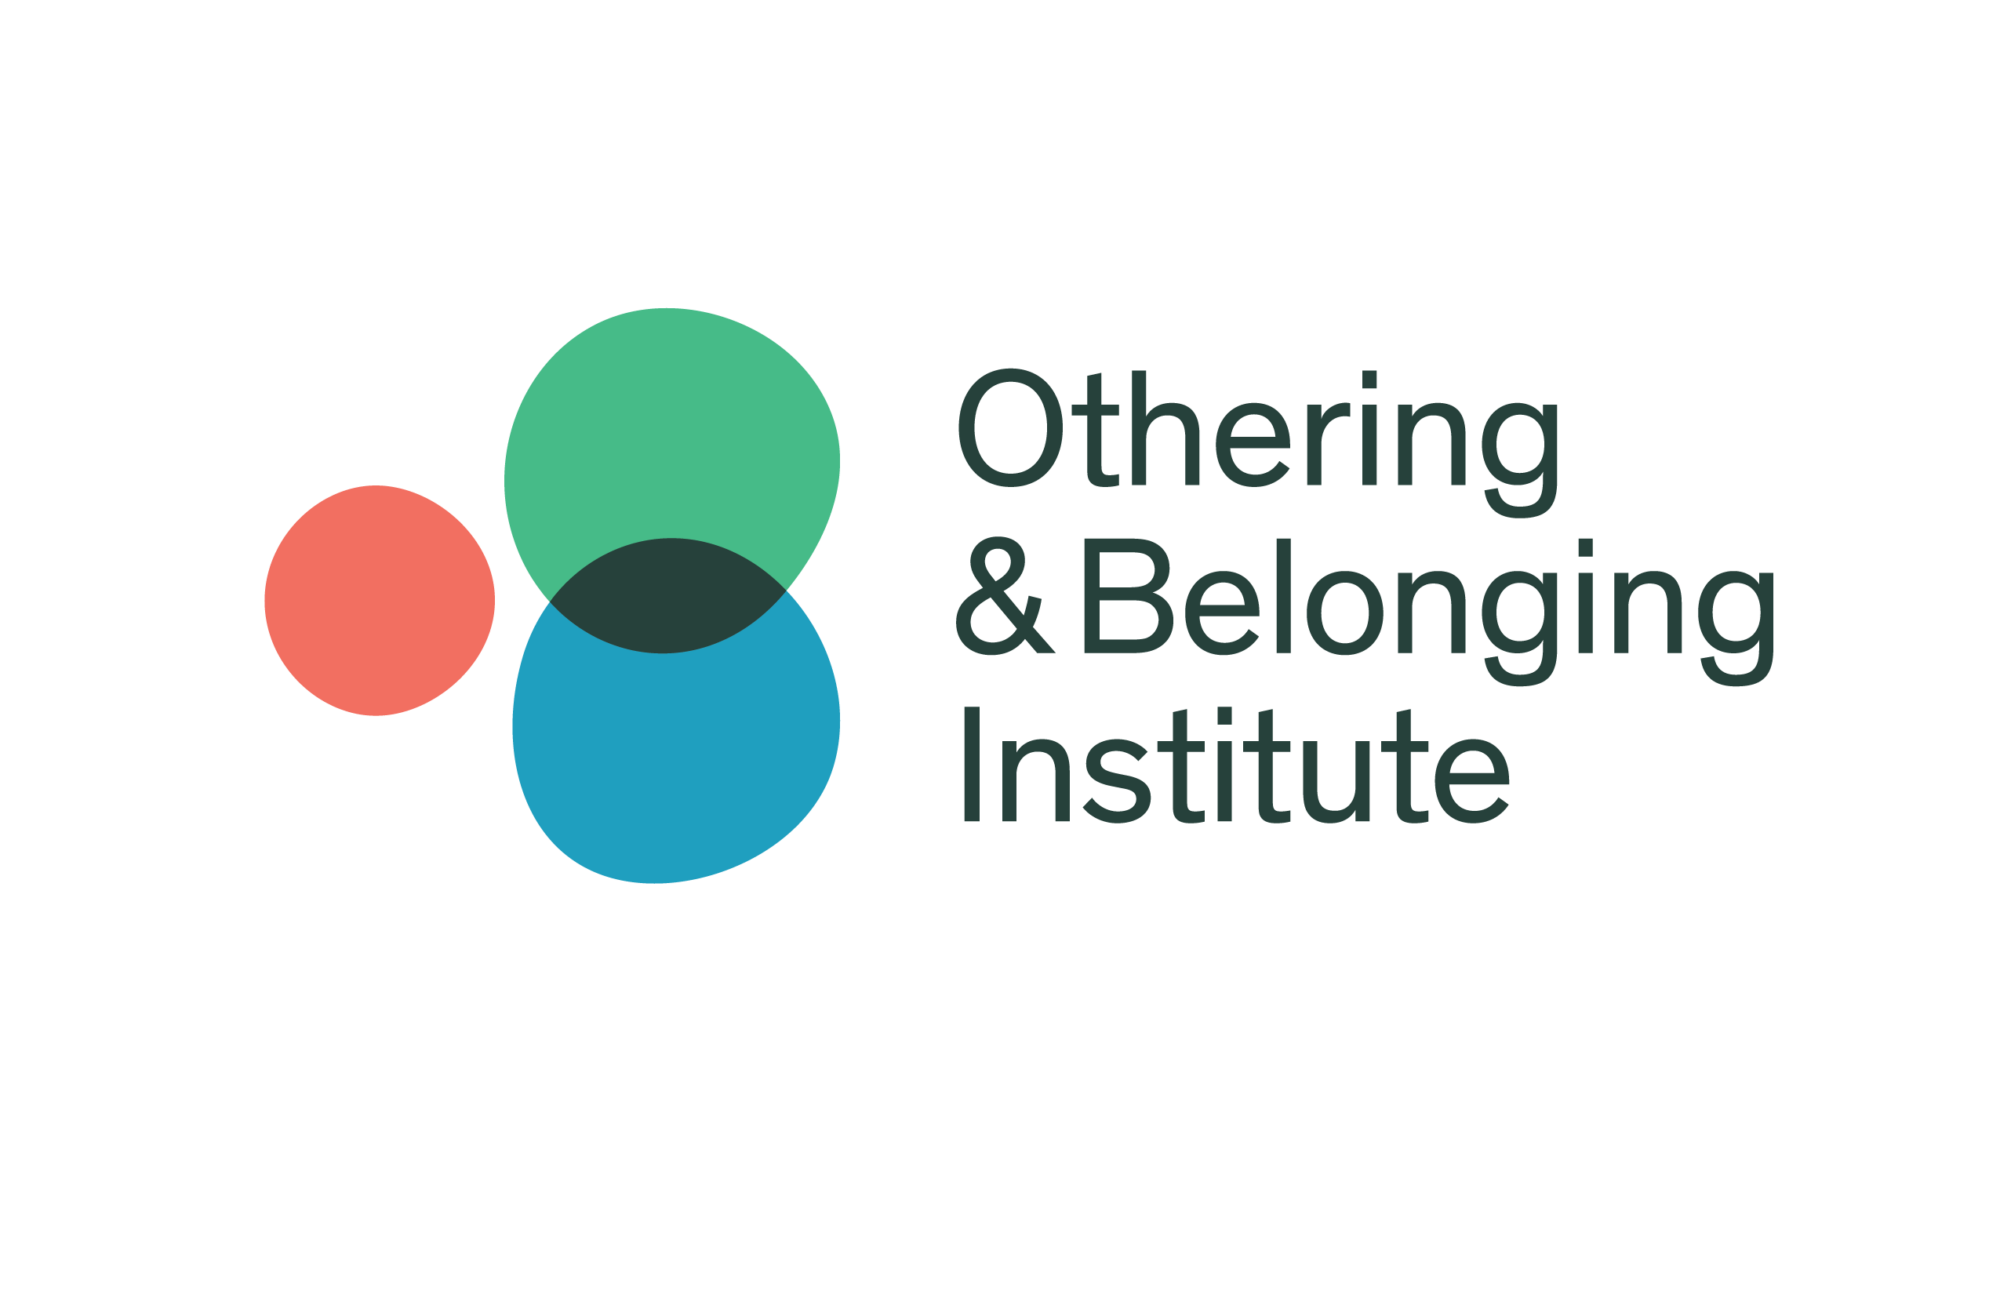 Othering & Belonging Institute